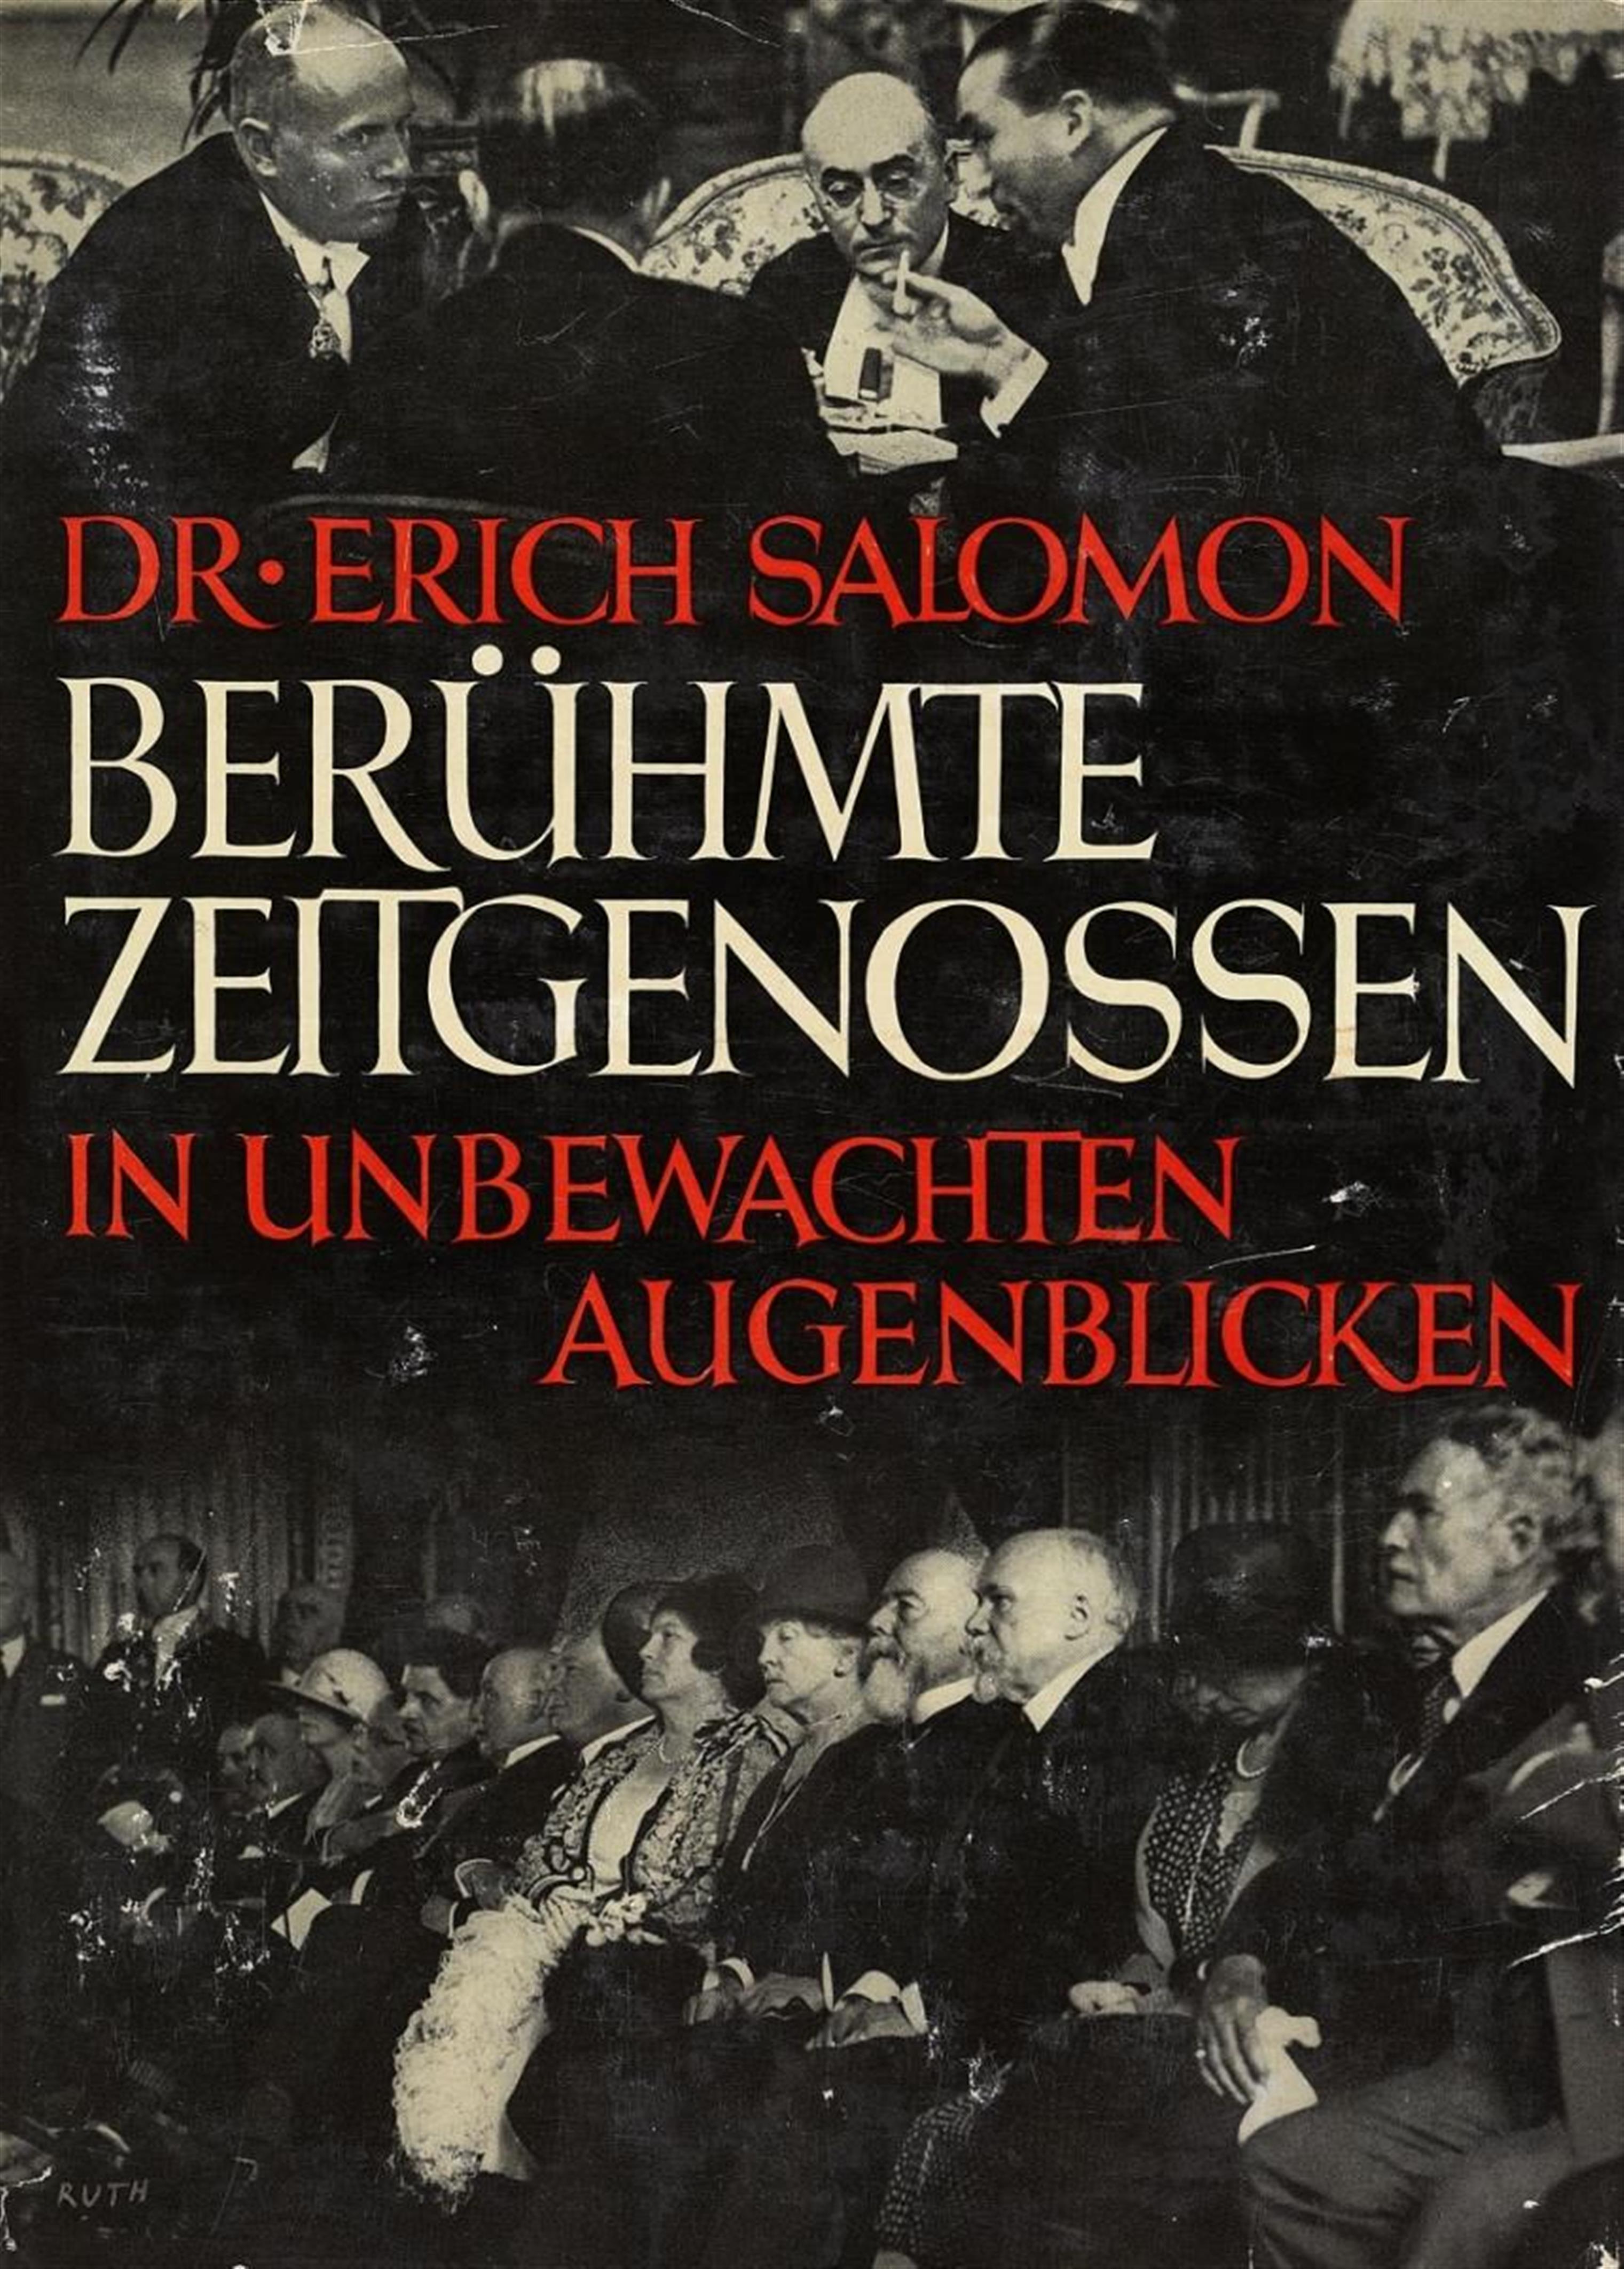 Erich Salomon - BERÜHMTE ZEITGENOSSEN IN UNBEWACHTEN AUGENBLICKEN - image-1